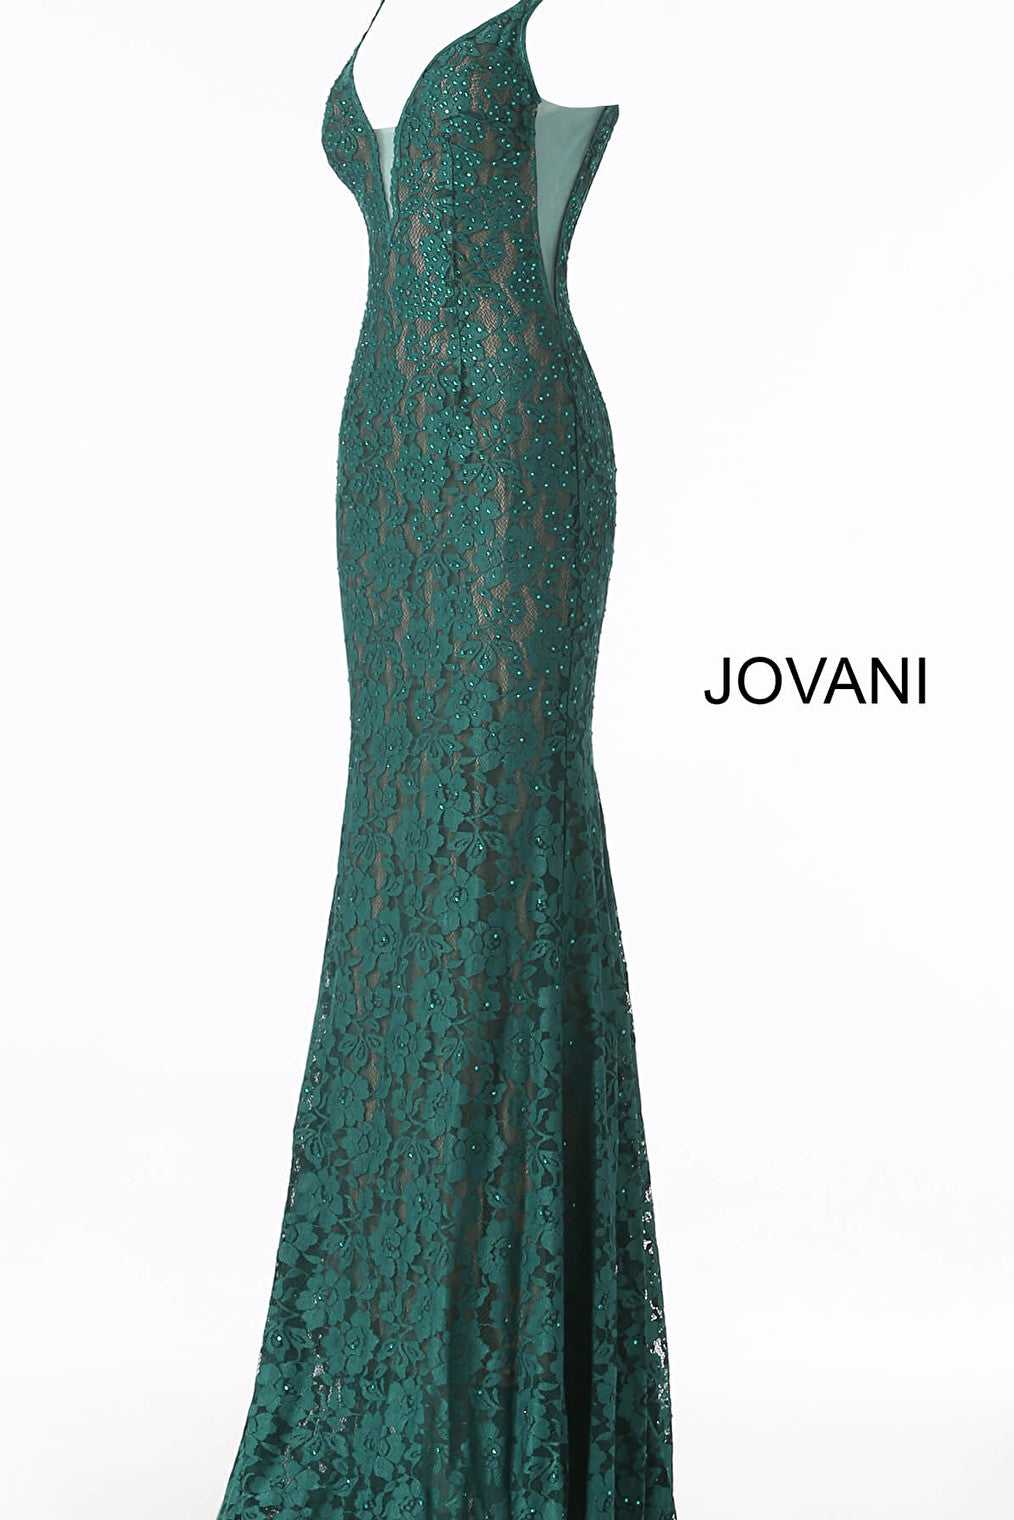 Jovani 48994 emerald